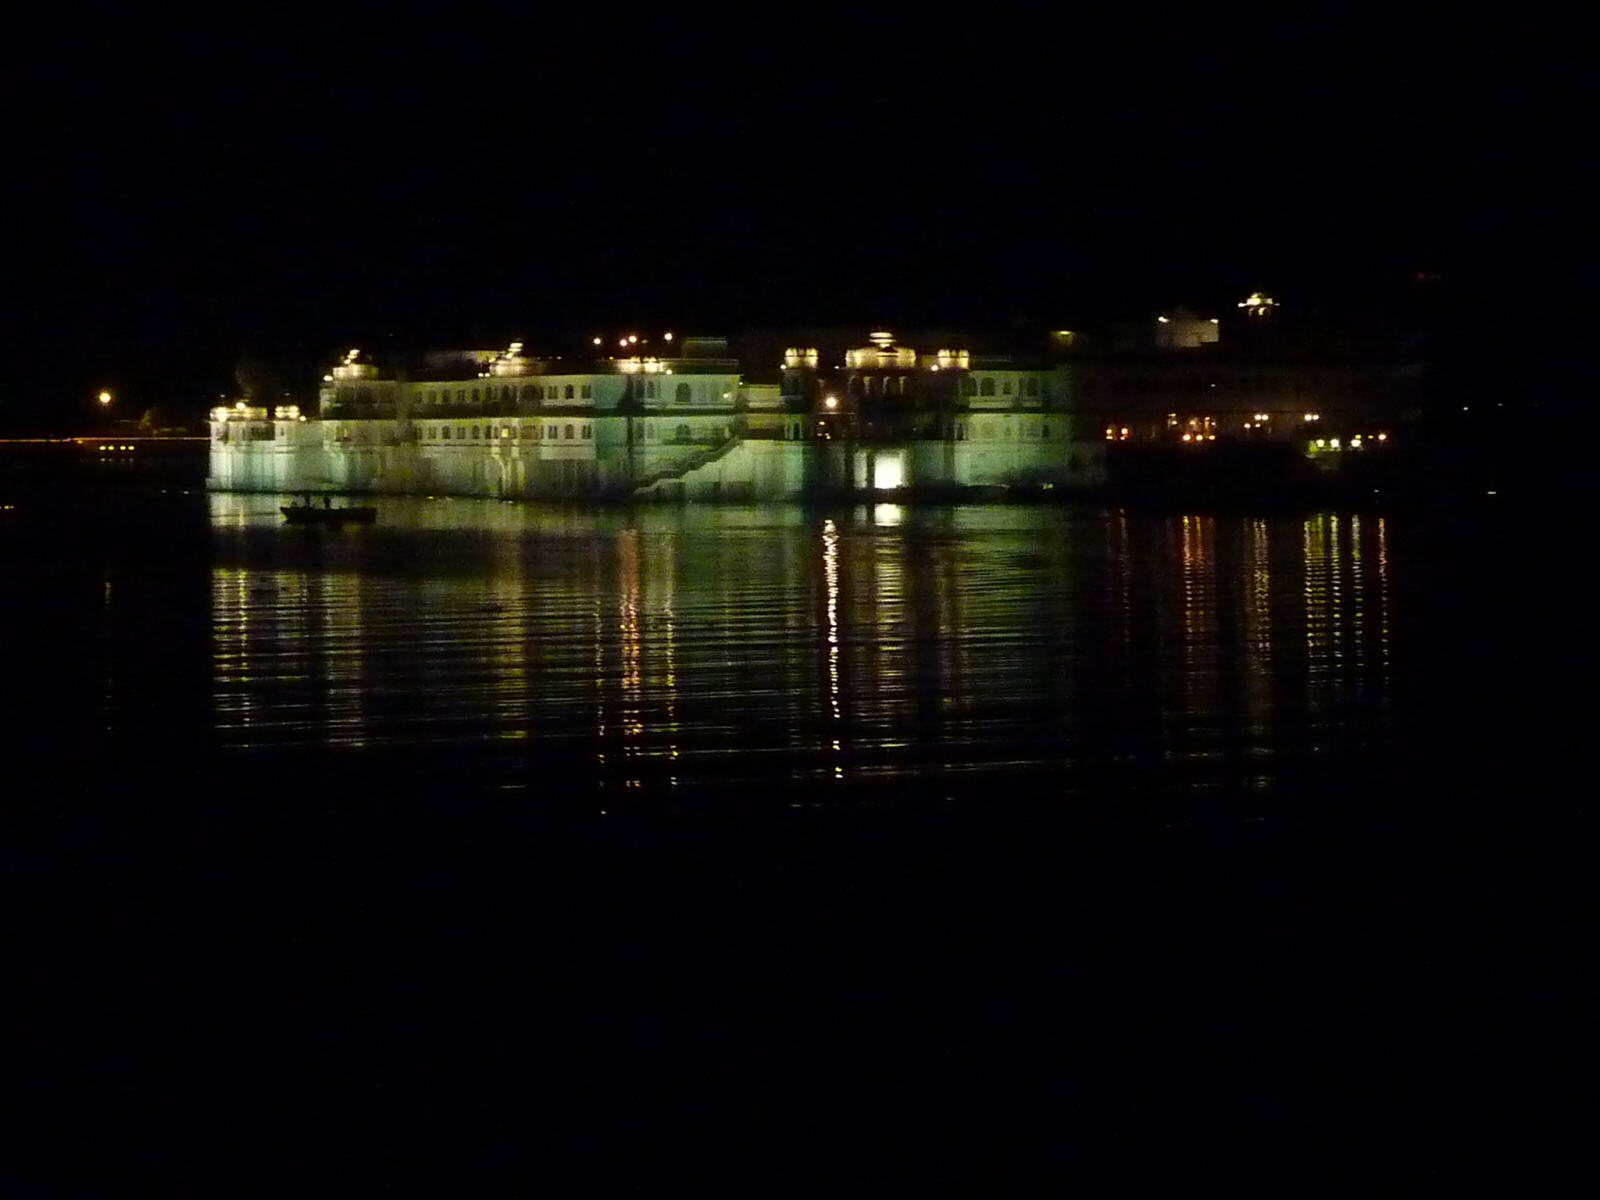 Nighttime at the lake palace in Udaipur, Rajasthan